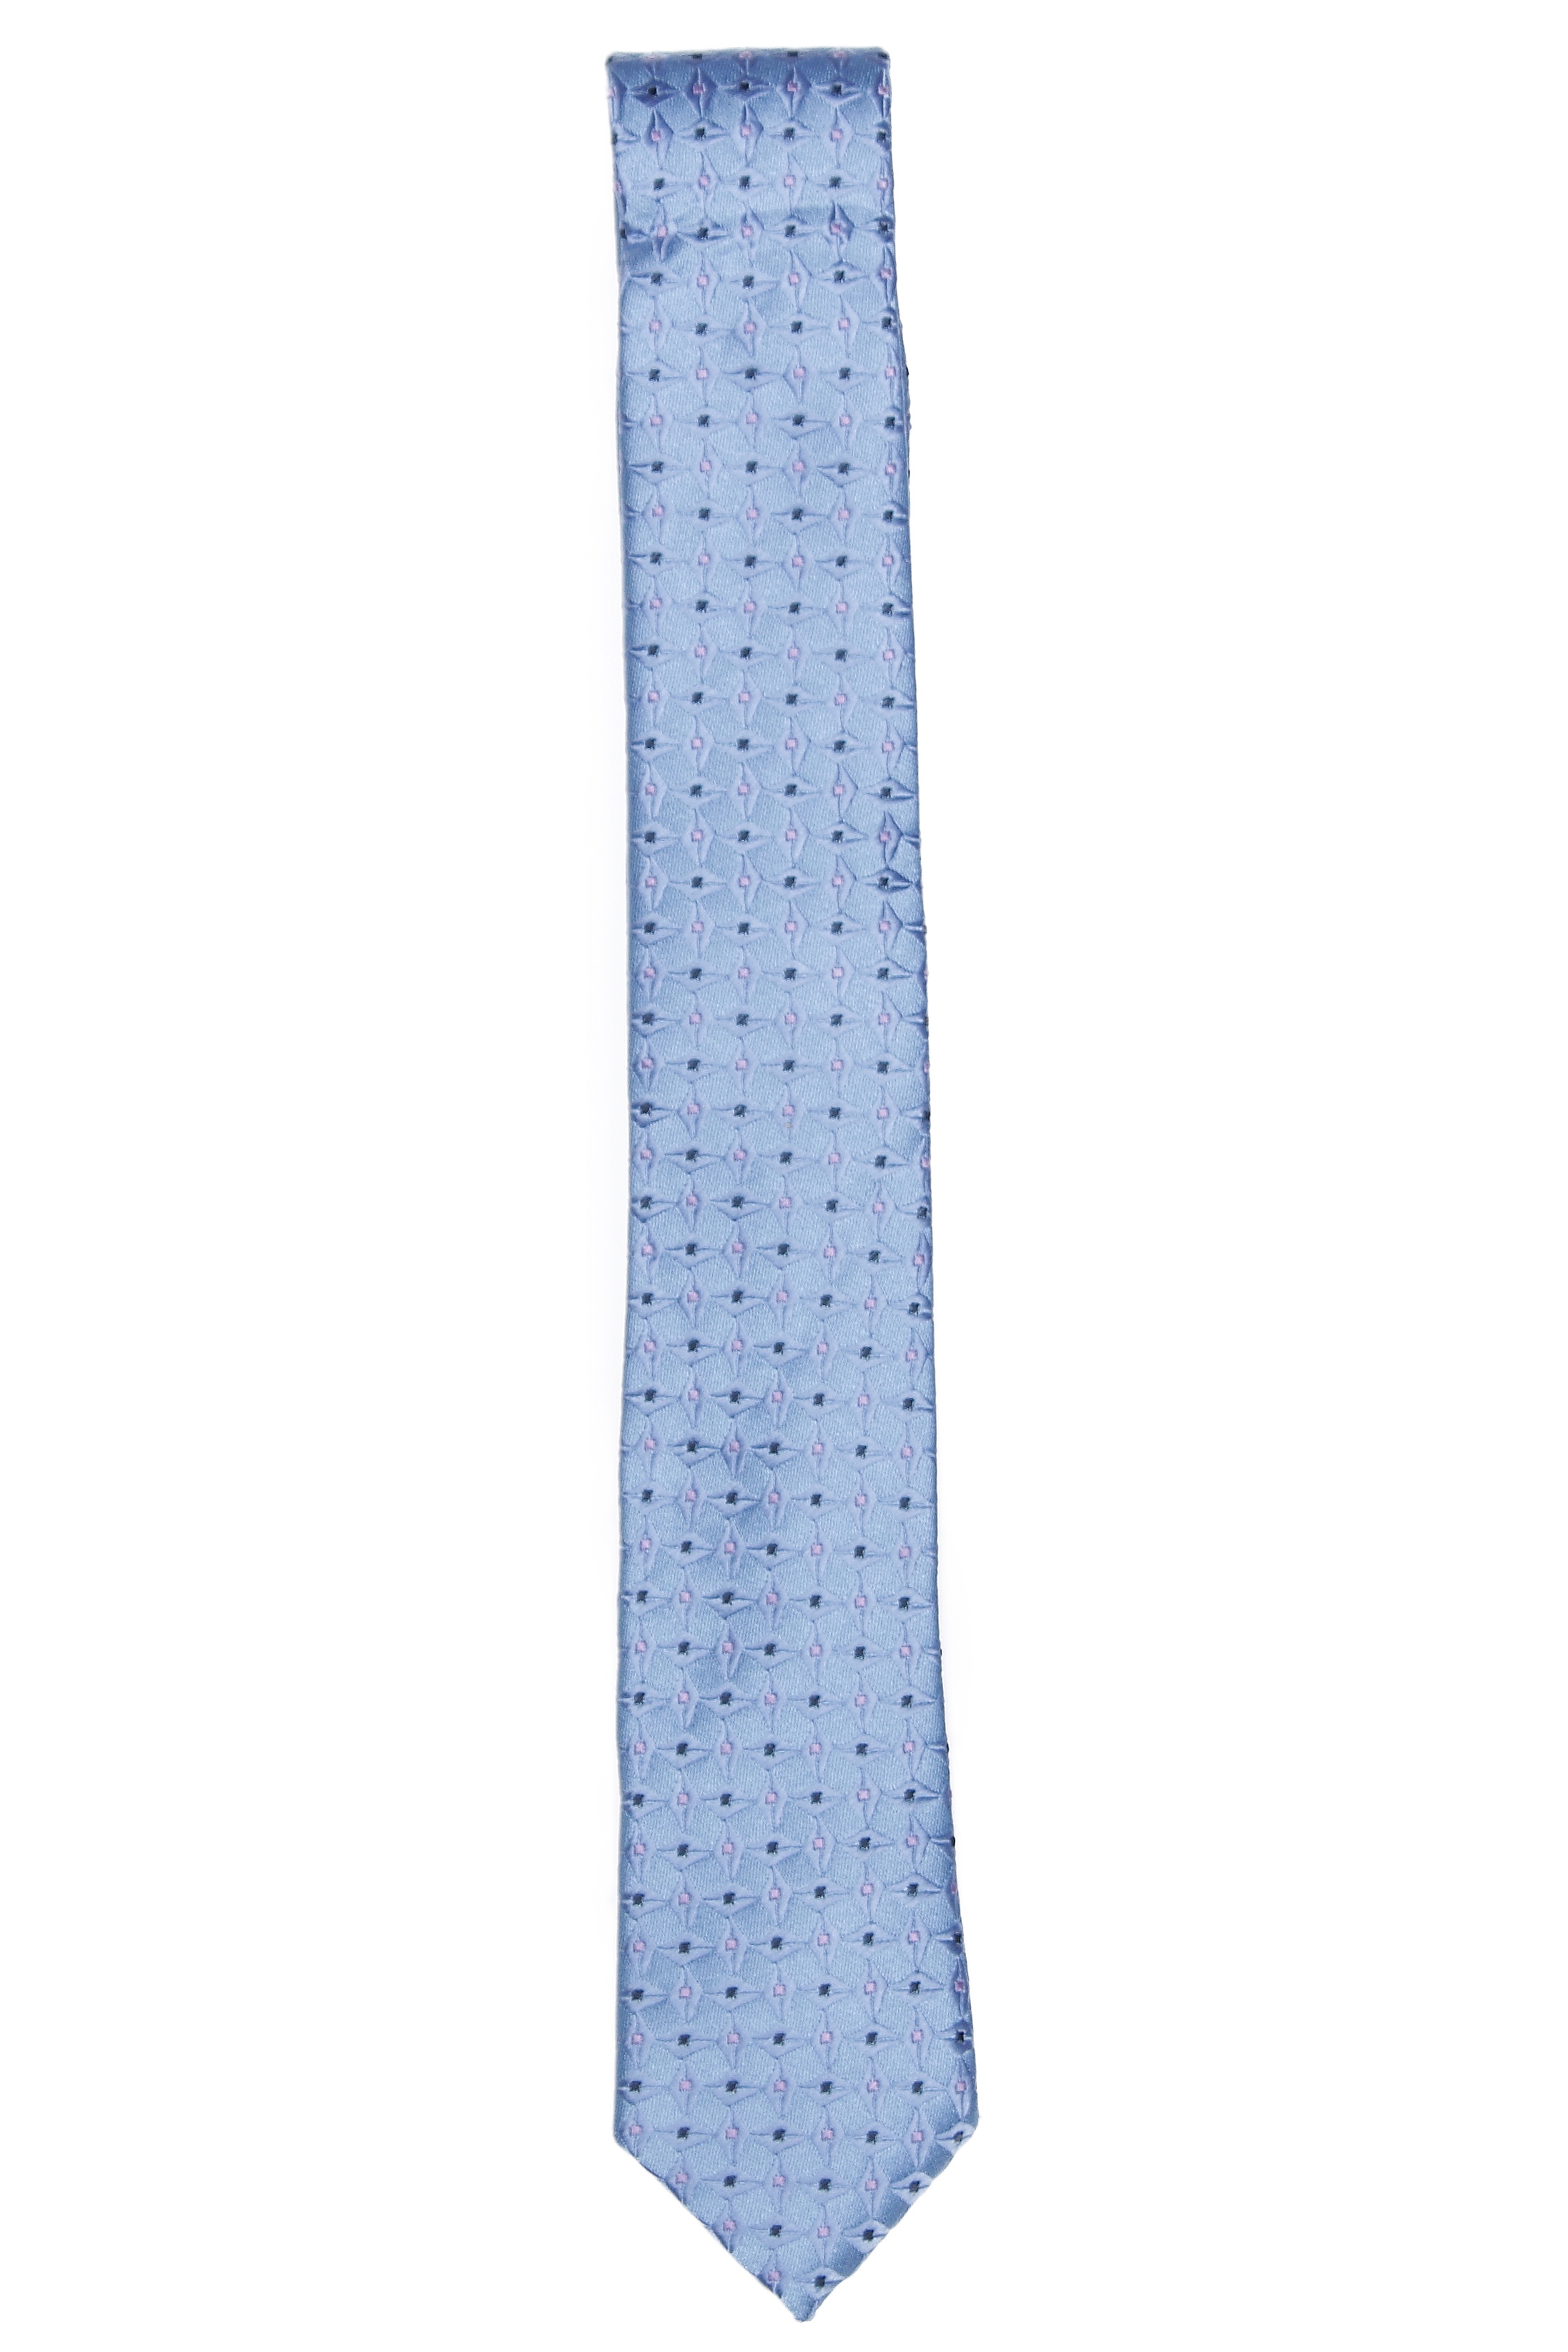 https://www.leadermode.com/201822/yves-enzo-cravate-motif-39-39-bleu-clair.jpg